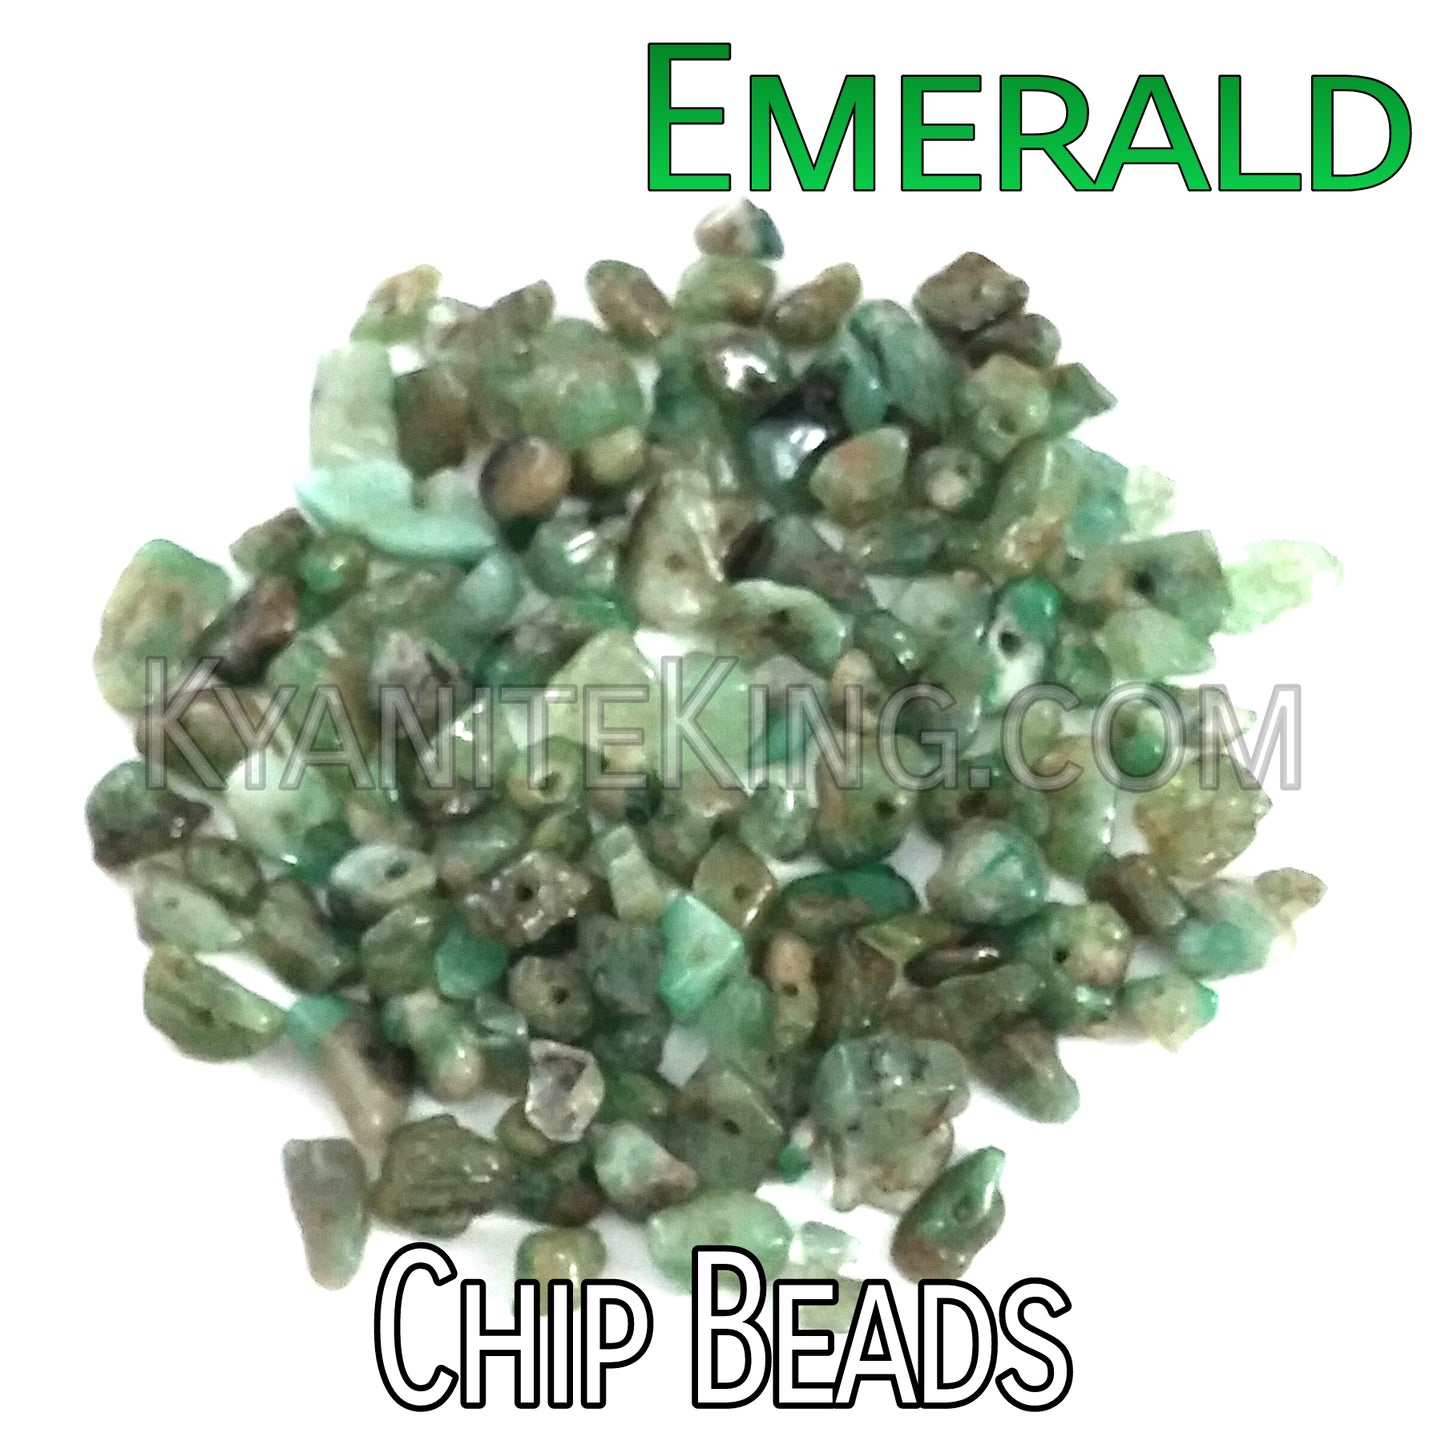 Emerald Chip Beads Kyanite King Beads